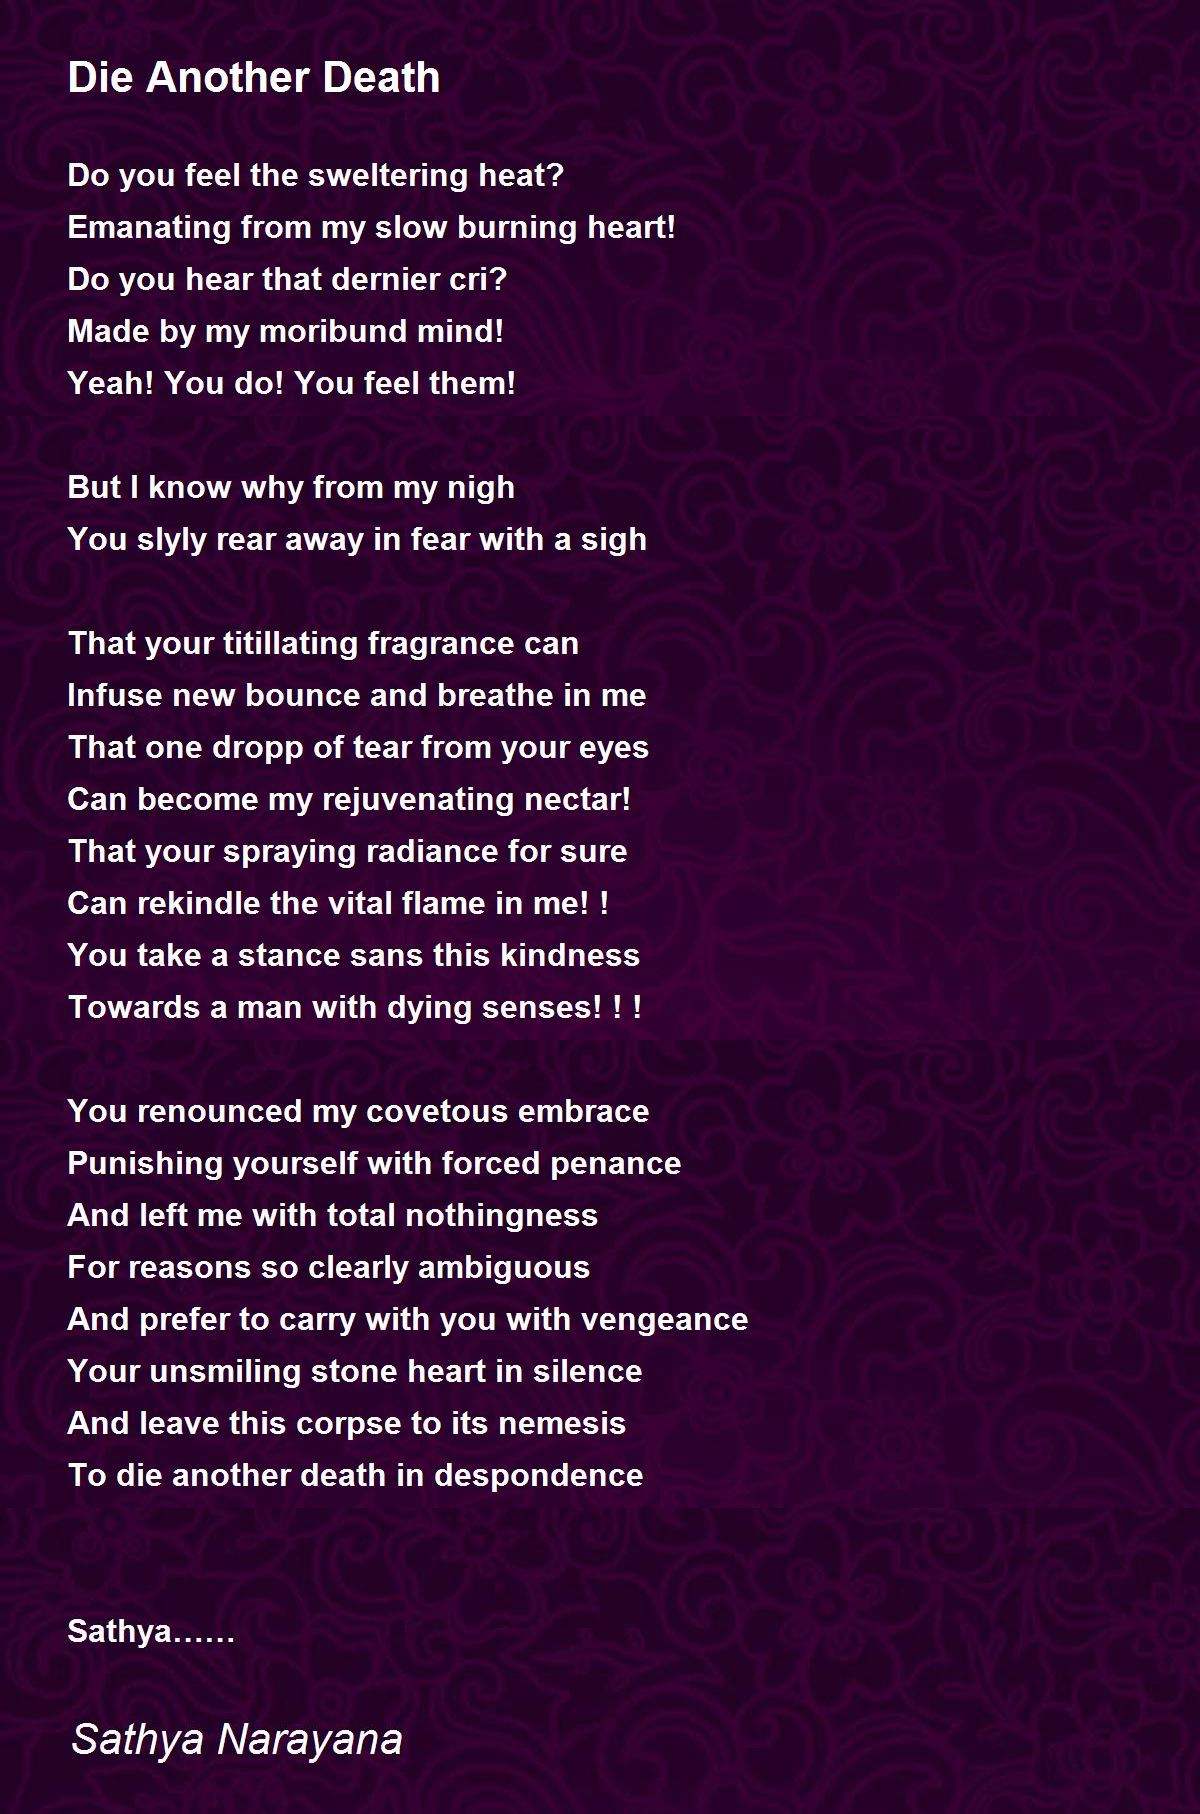 Die Another Death - Die Another Death Poem by Sathya Narayana